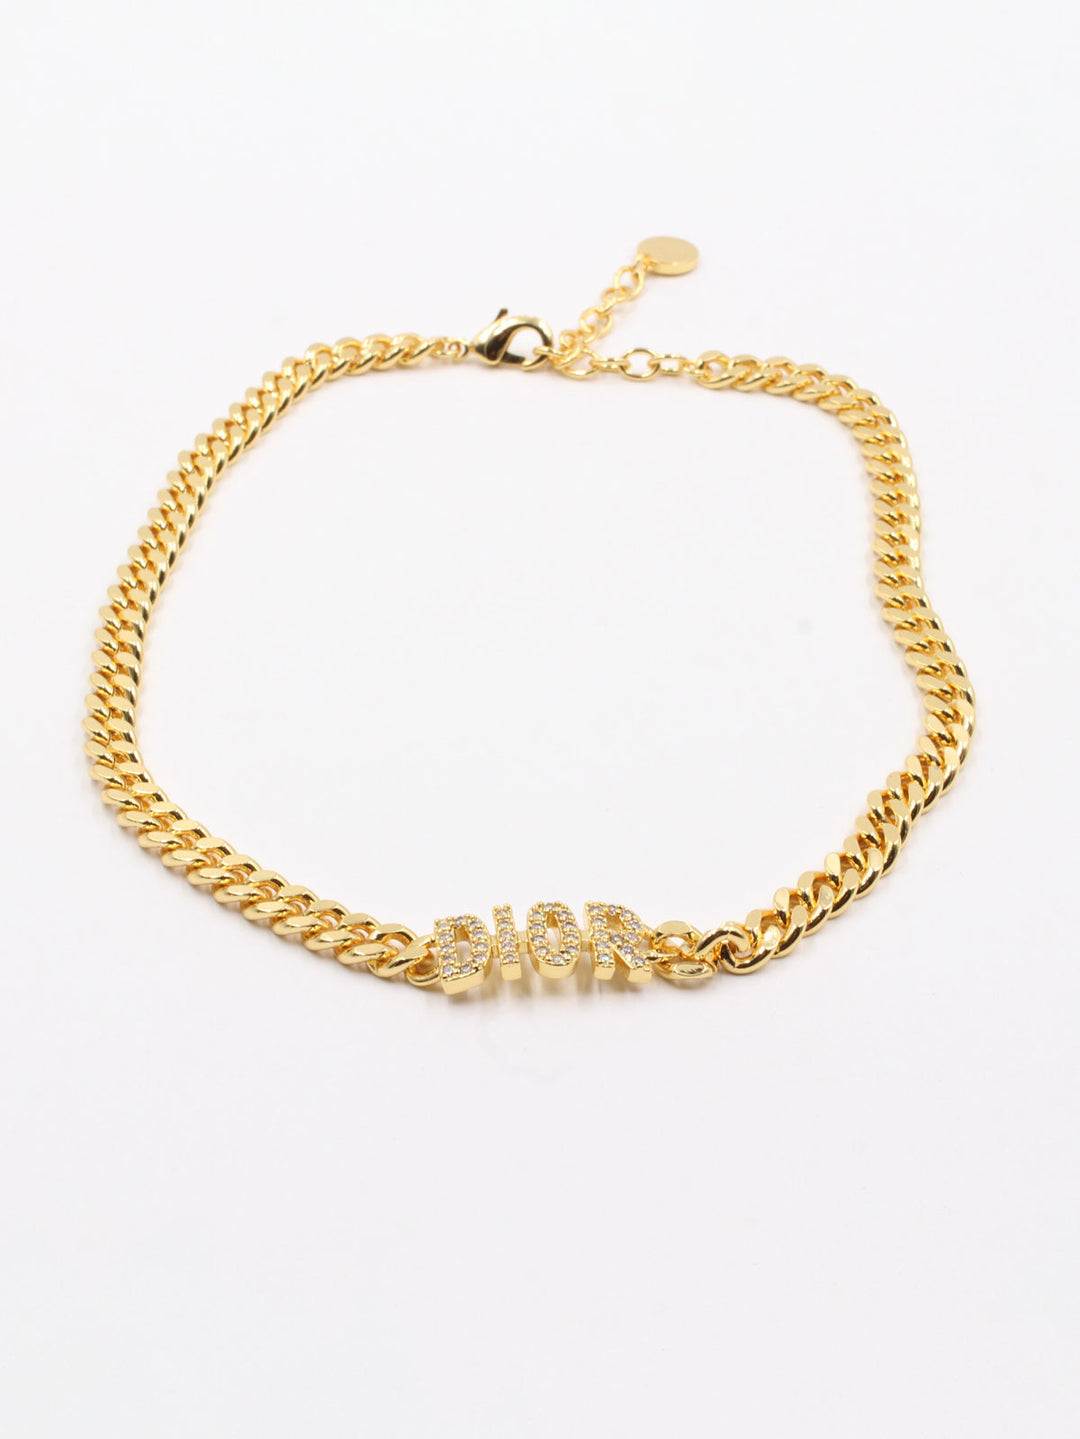 Dior zircon necklace - سلسال ديور زركون  - Jewel